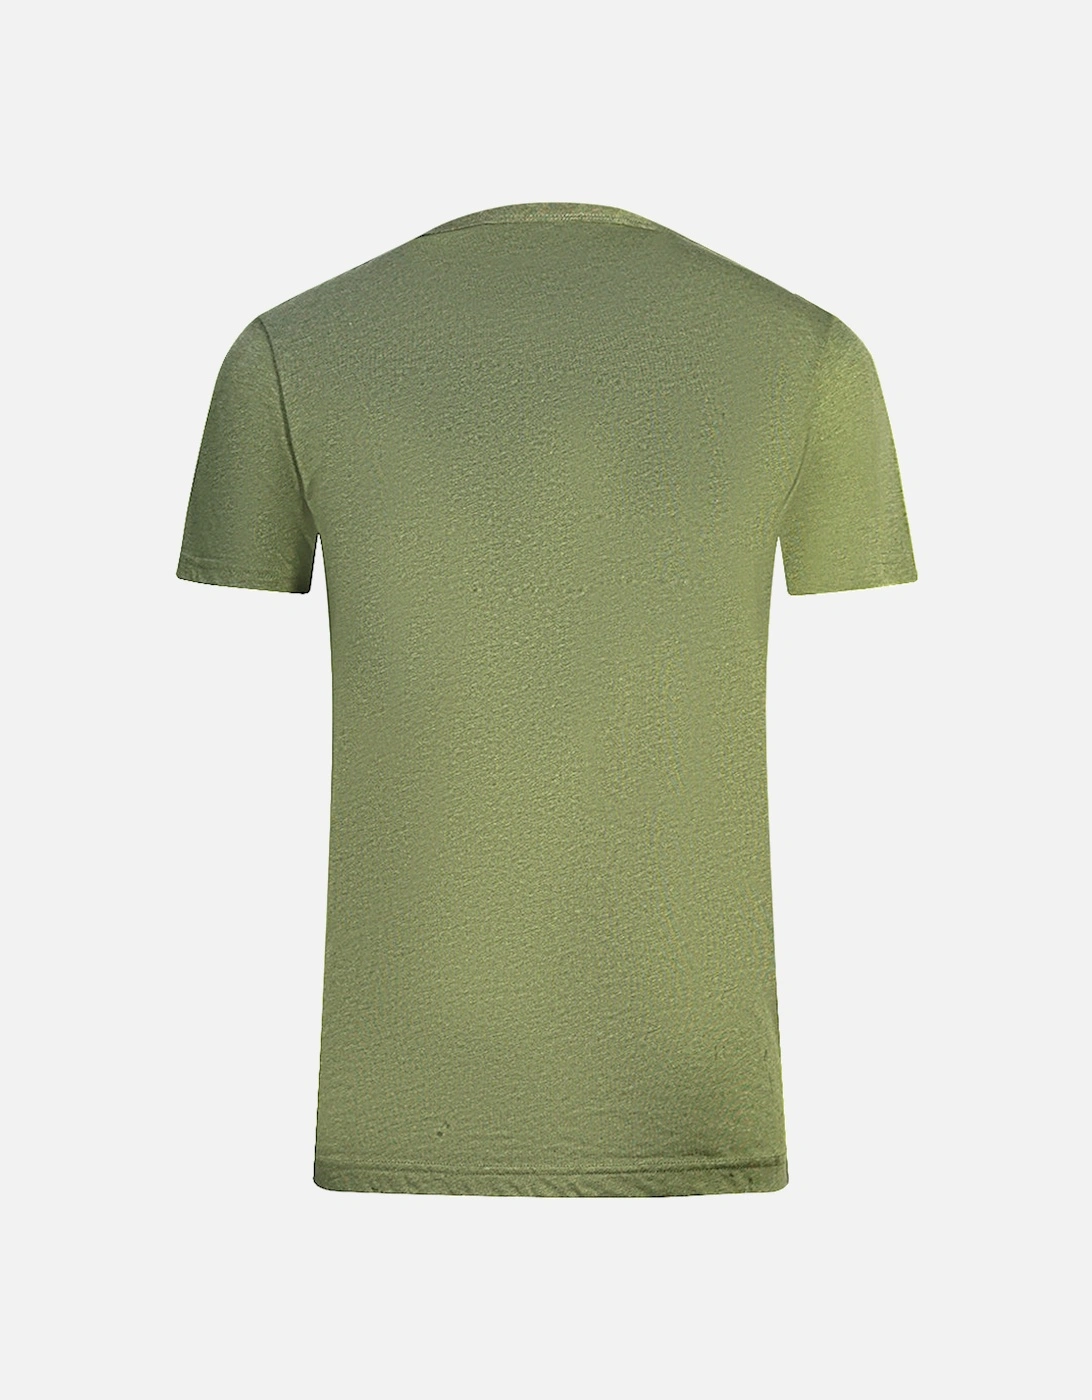 Raw Eramin Green T-Shirt